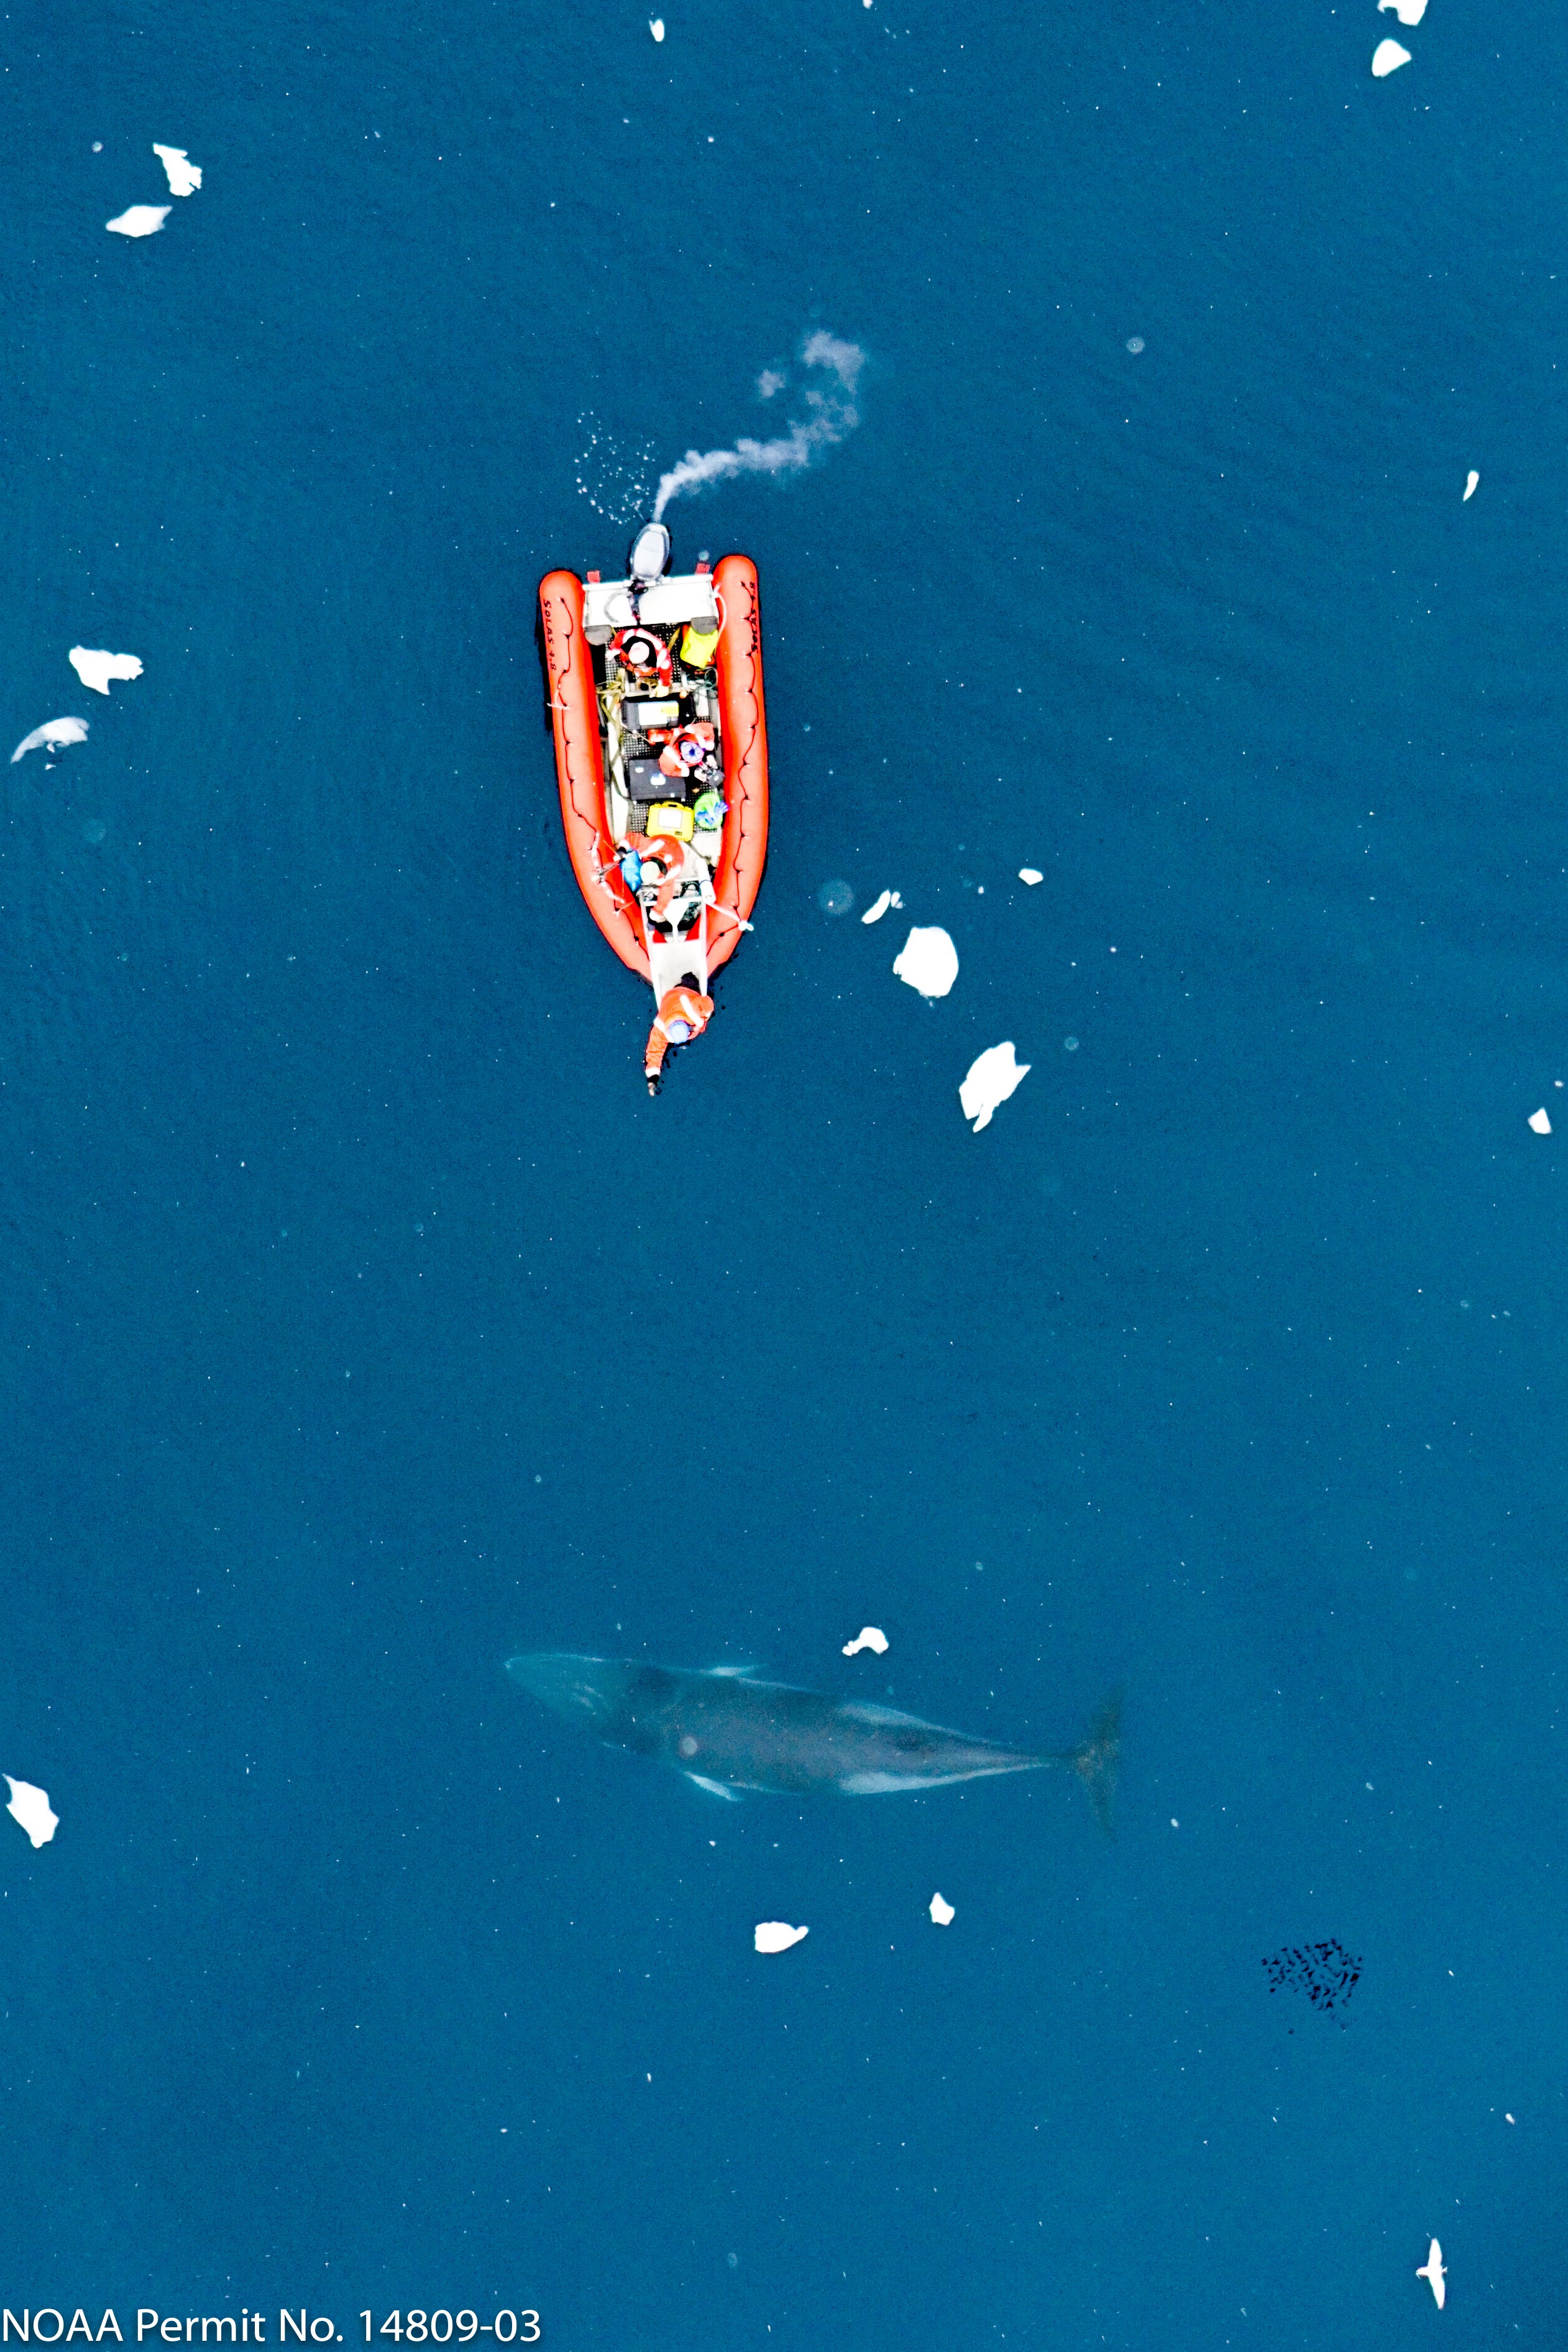 Minke whale. Credit Duke Marine Robotics and Remote Sensing Lab